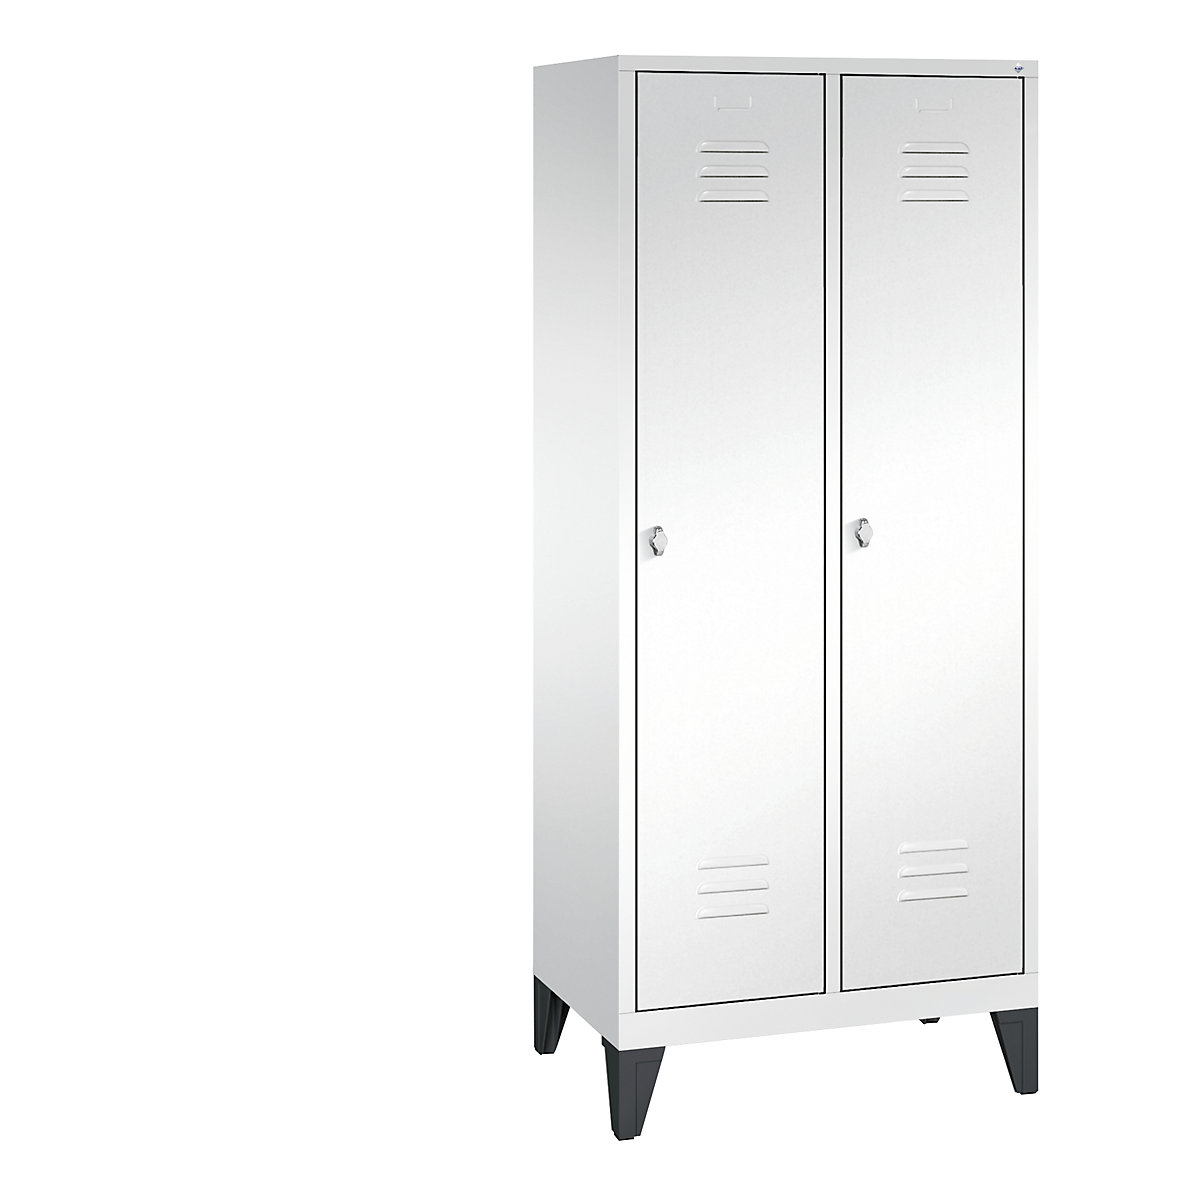 CLASSIC cloakroom locker with feet – C+P